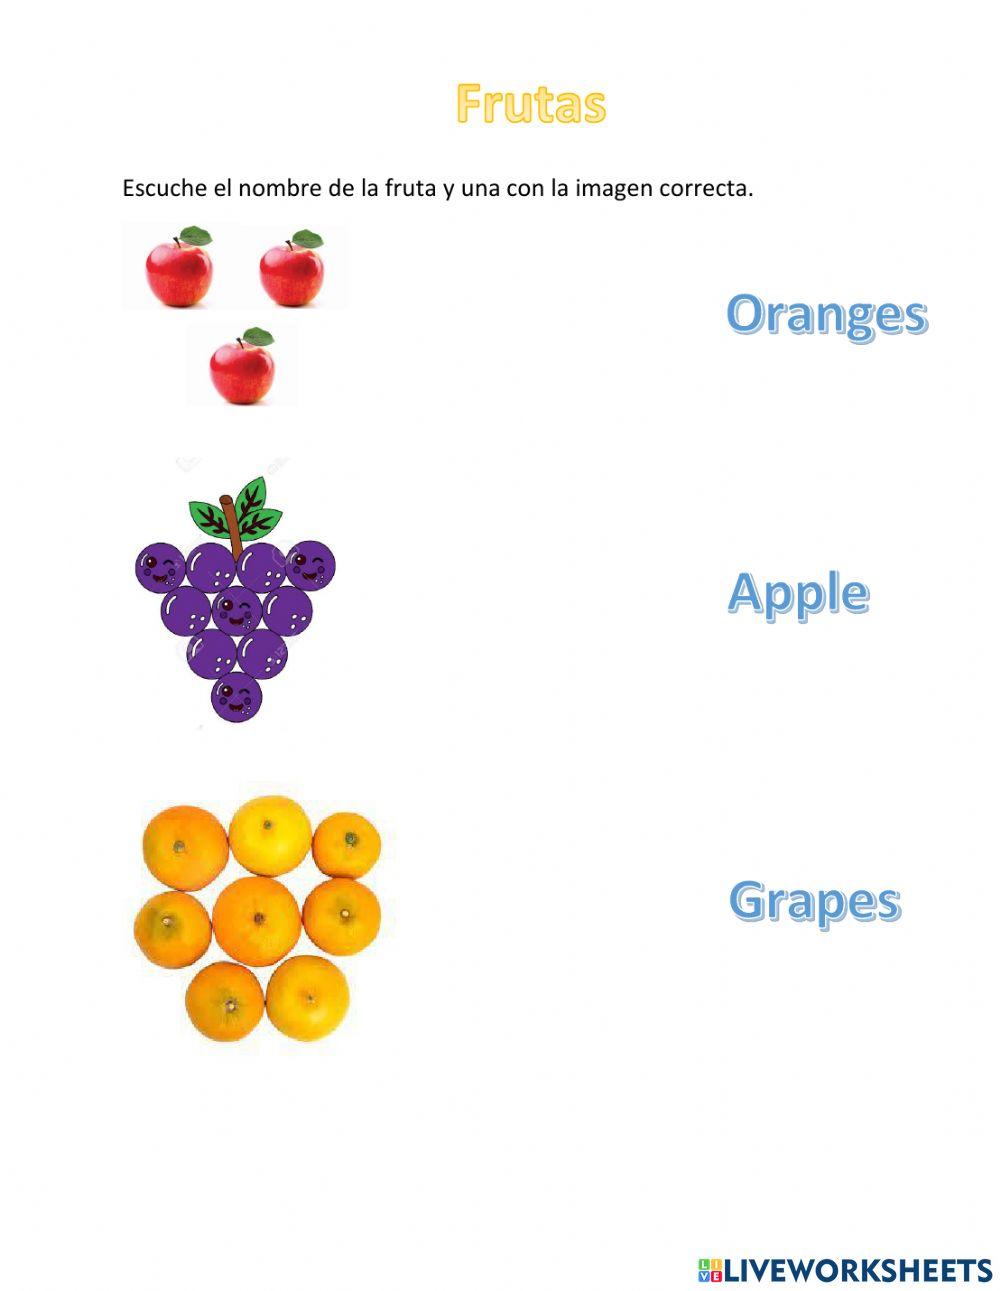 Apple, orange and grapes